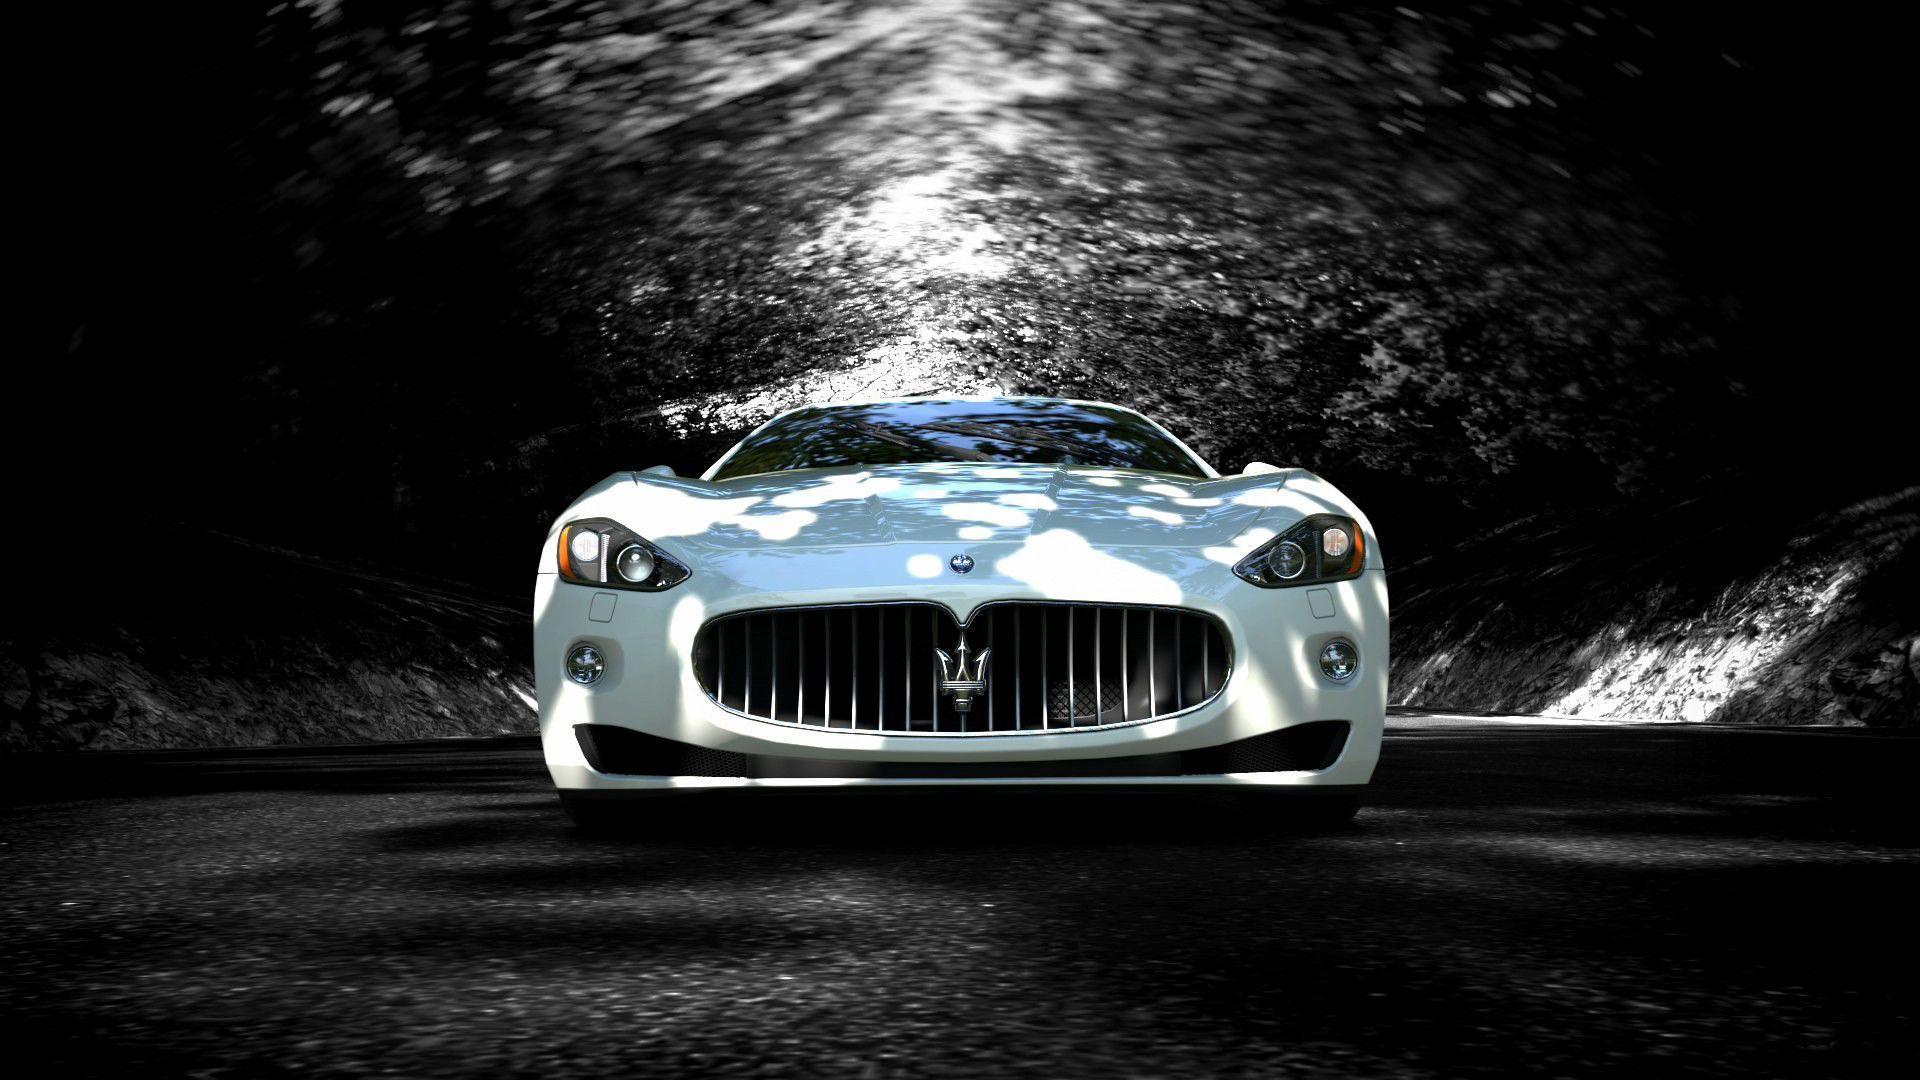 Maserati Wallpaper